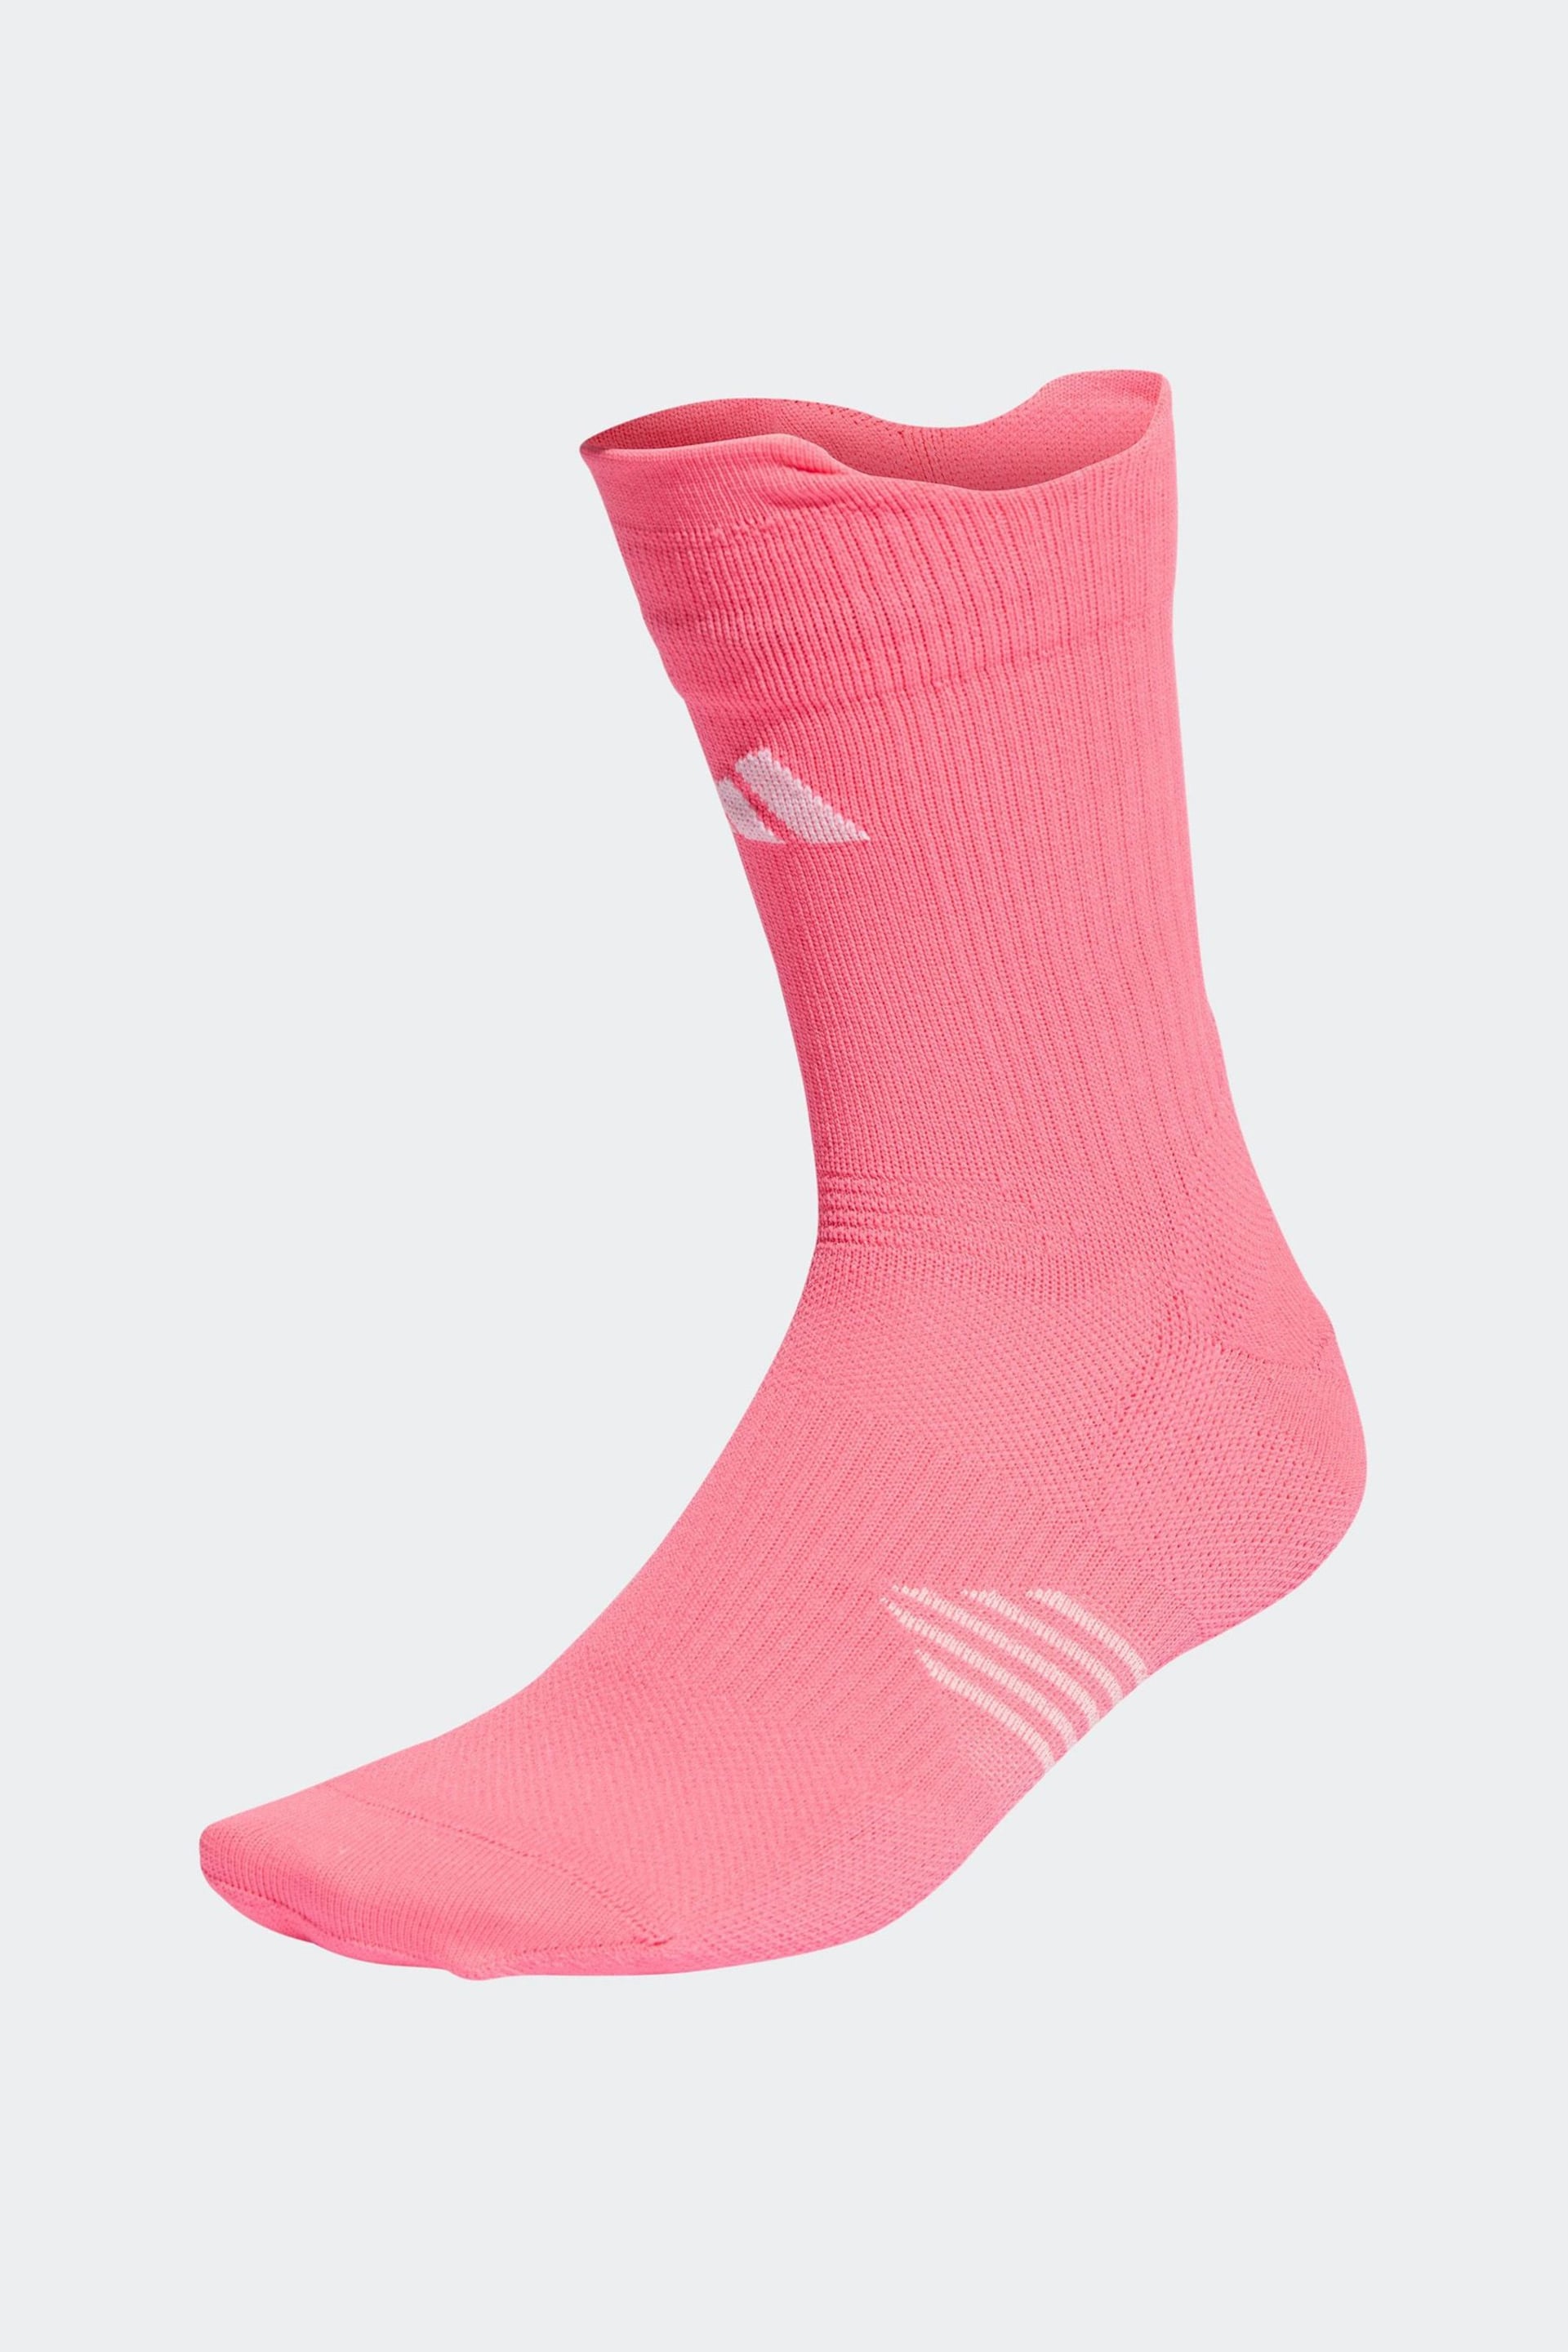 adidas Pink Adult Running x Supernova Crew Socks - Image 1 of 1